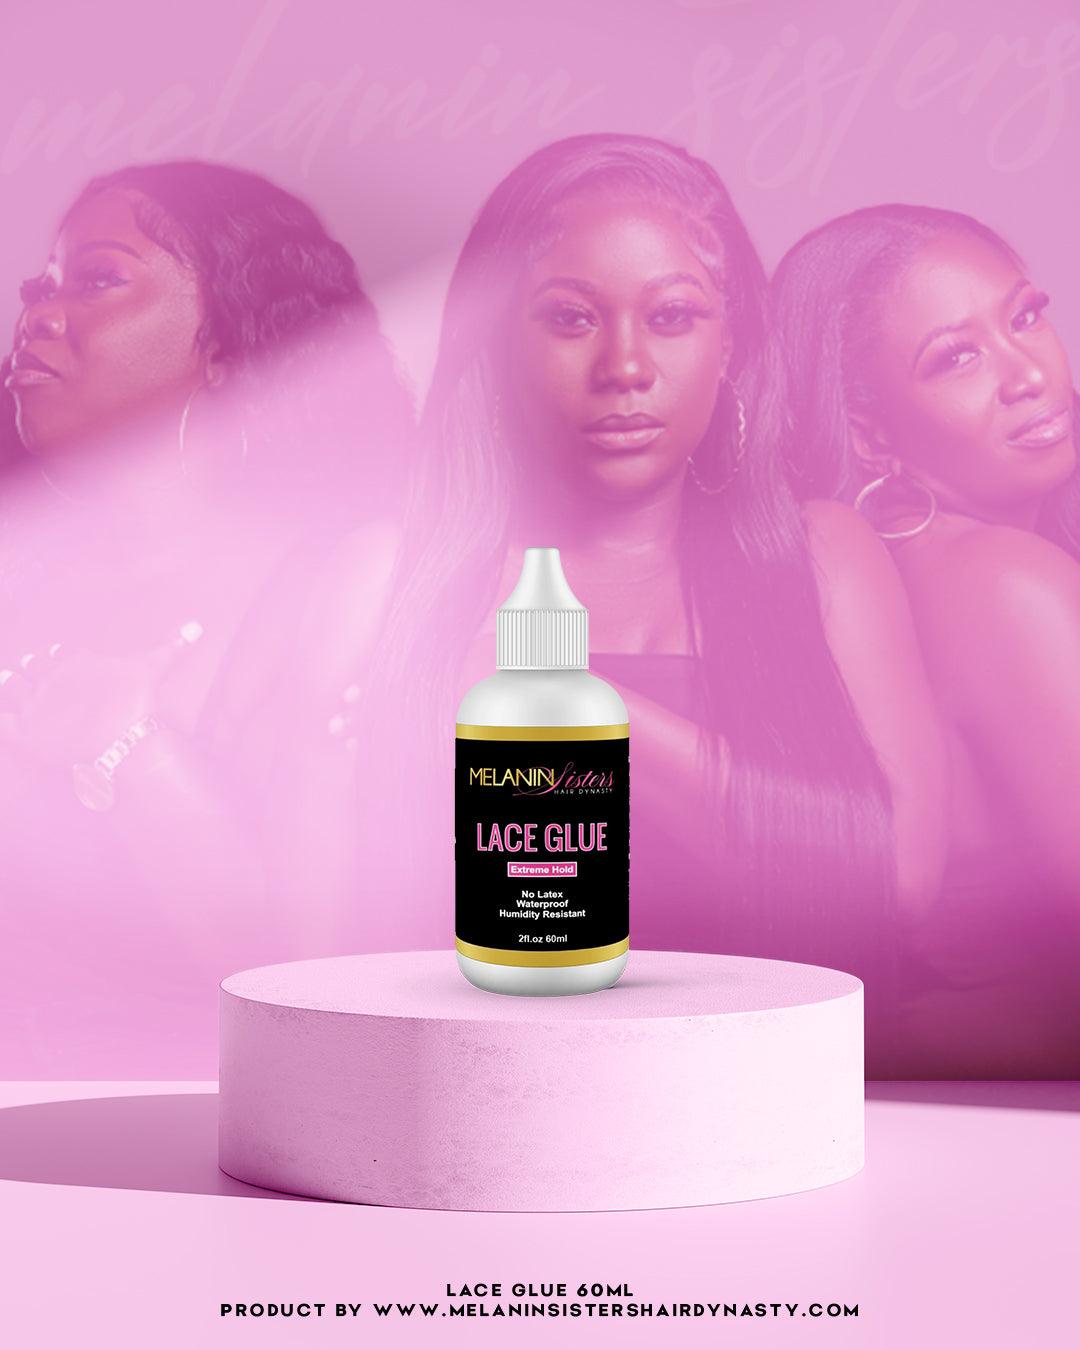 Lace Glue – Melanin Sisters Hair Dynasty